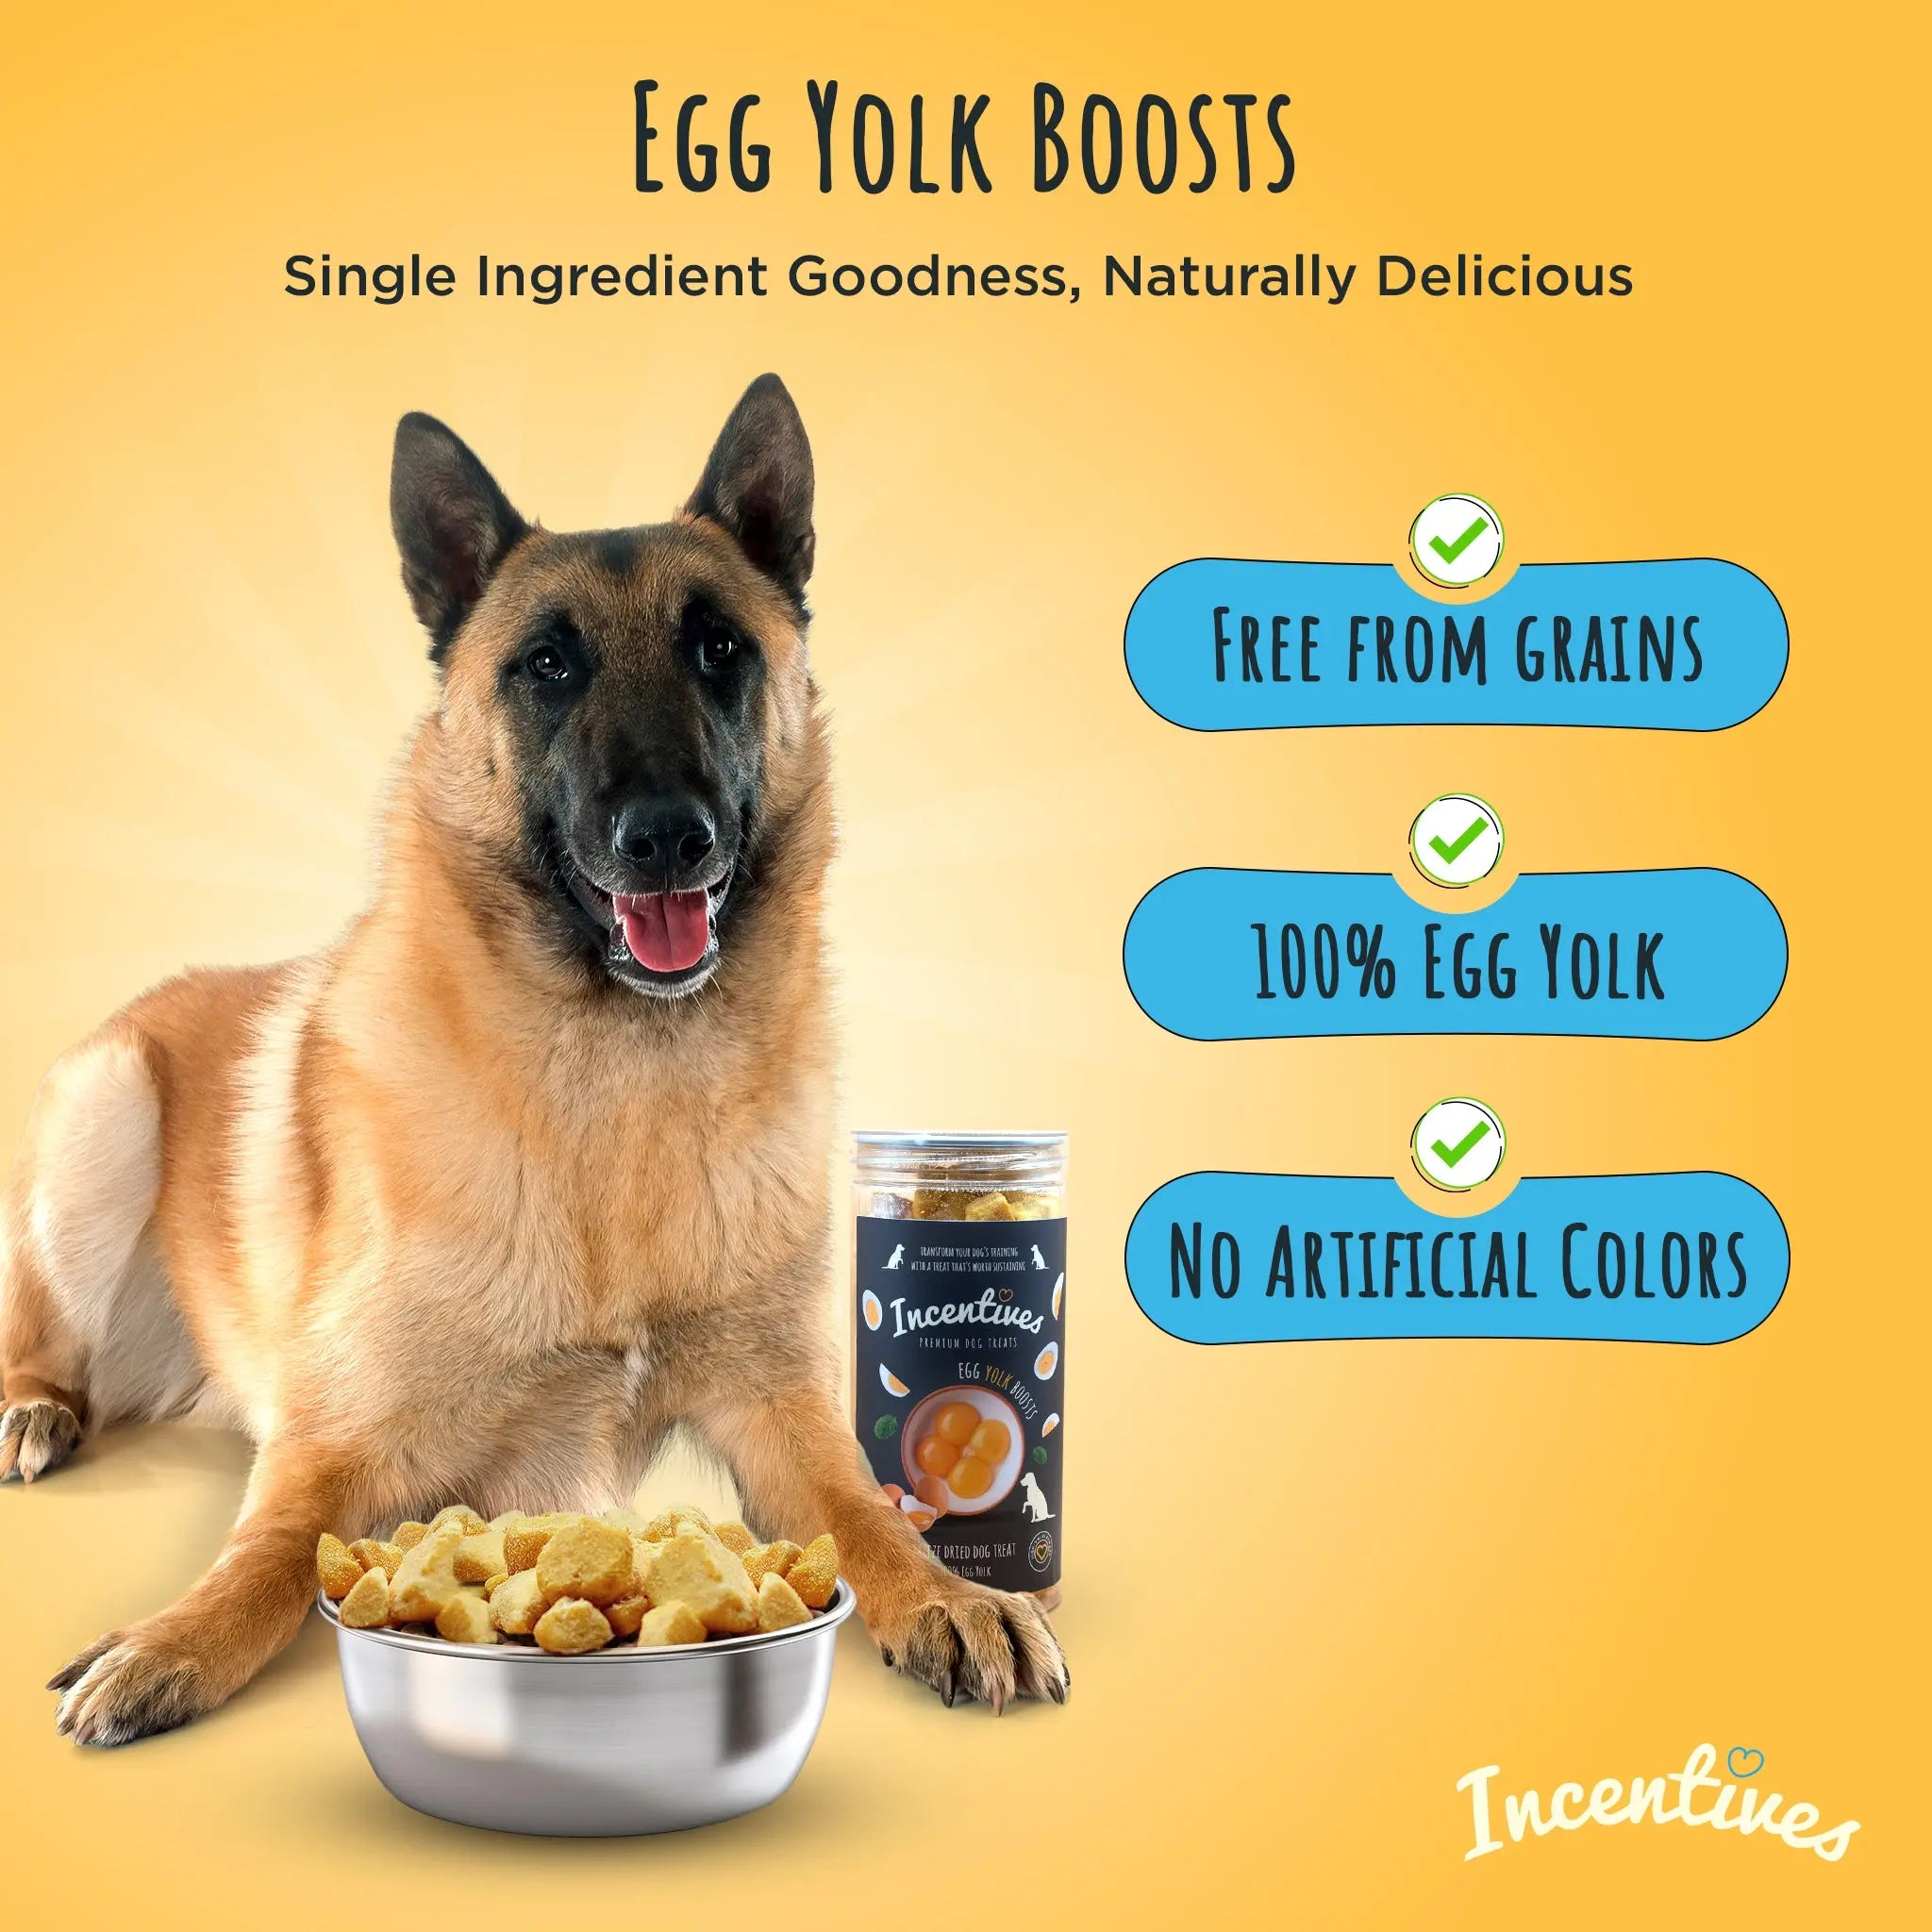 Egg Yolk Boosts